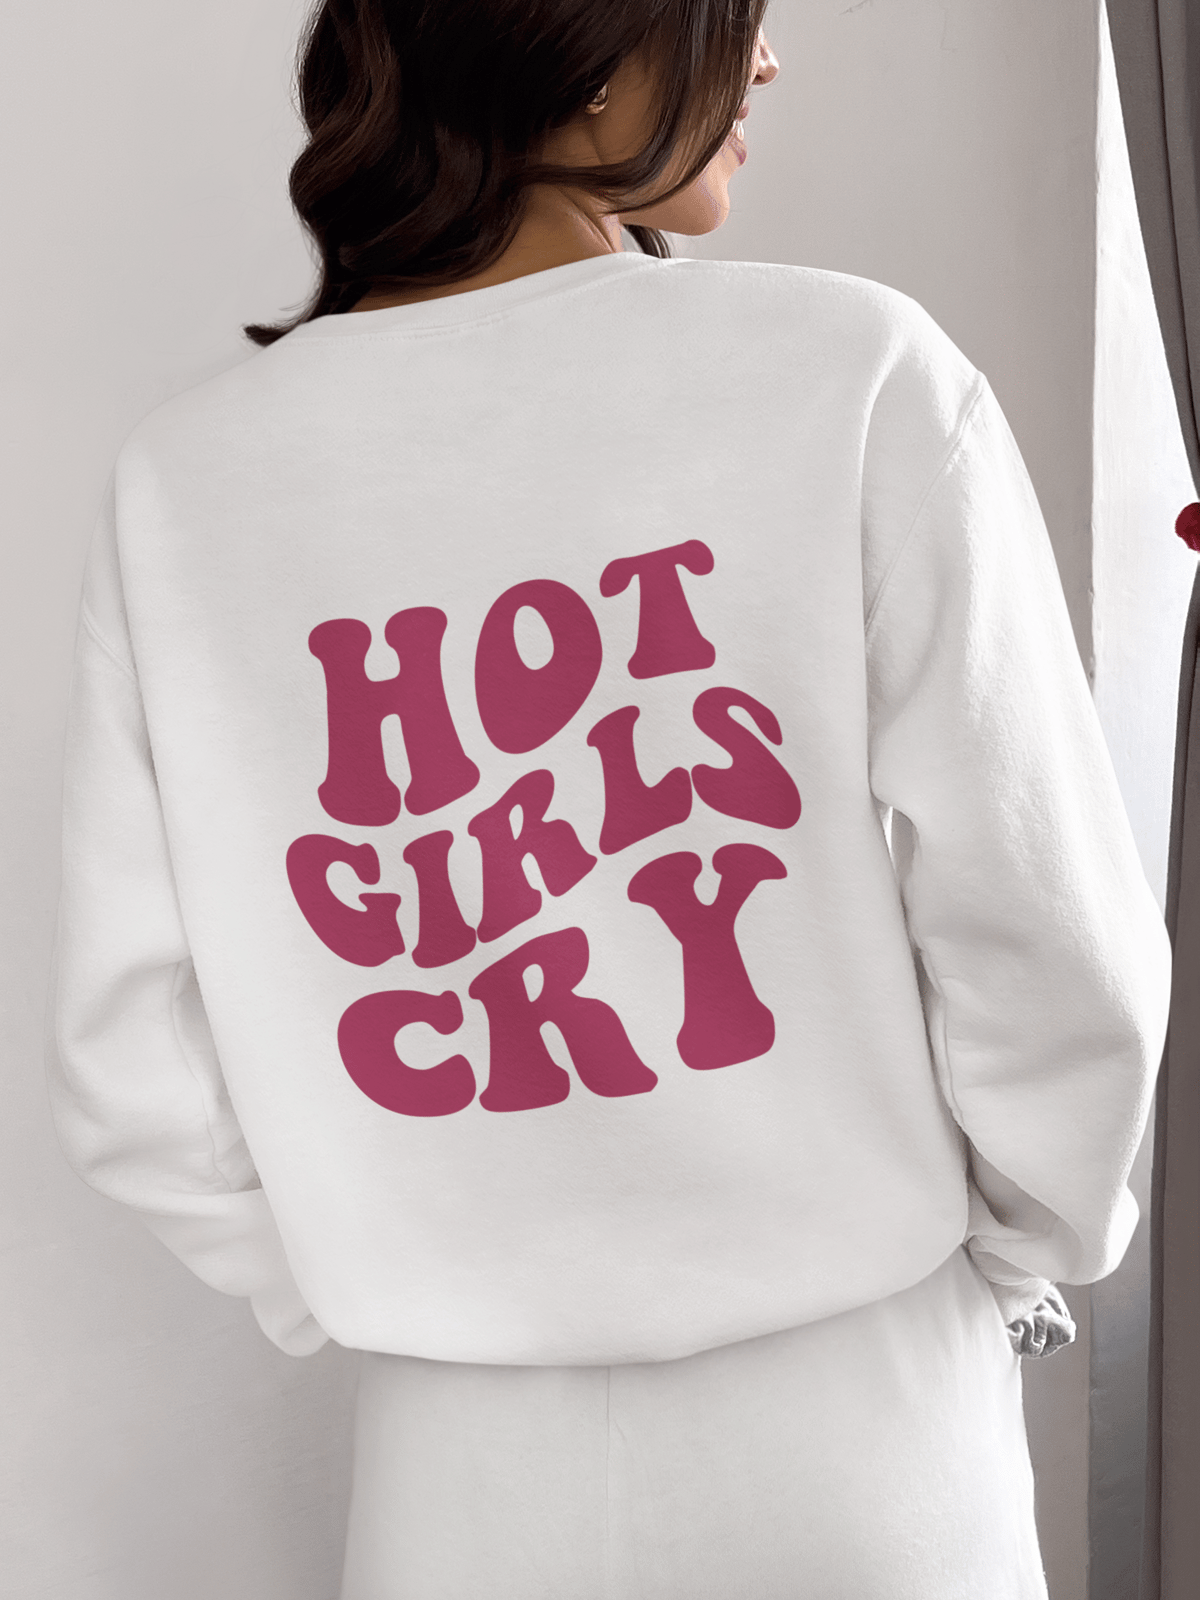 HOT GIRLS CRY CREW | Soul Stitch